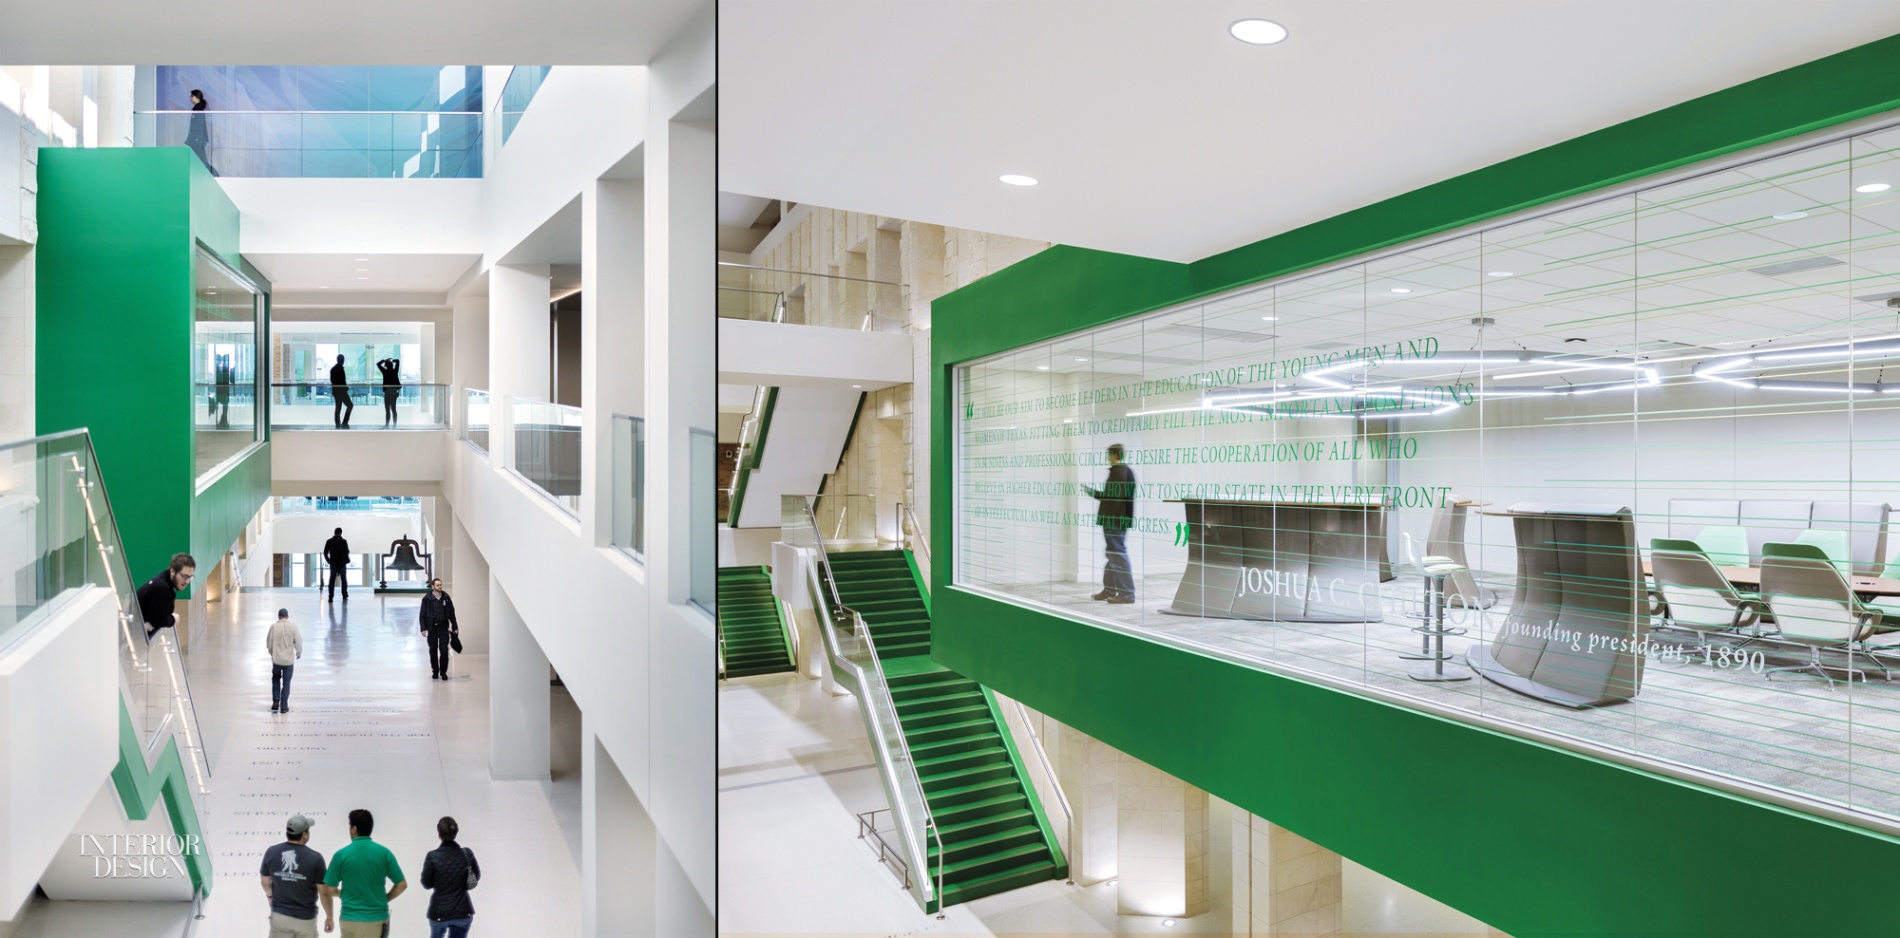 Level Up Your Design Skills: Top Colleges For Interior Design